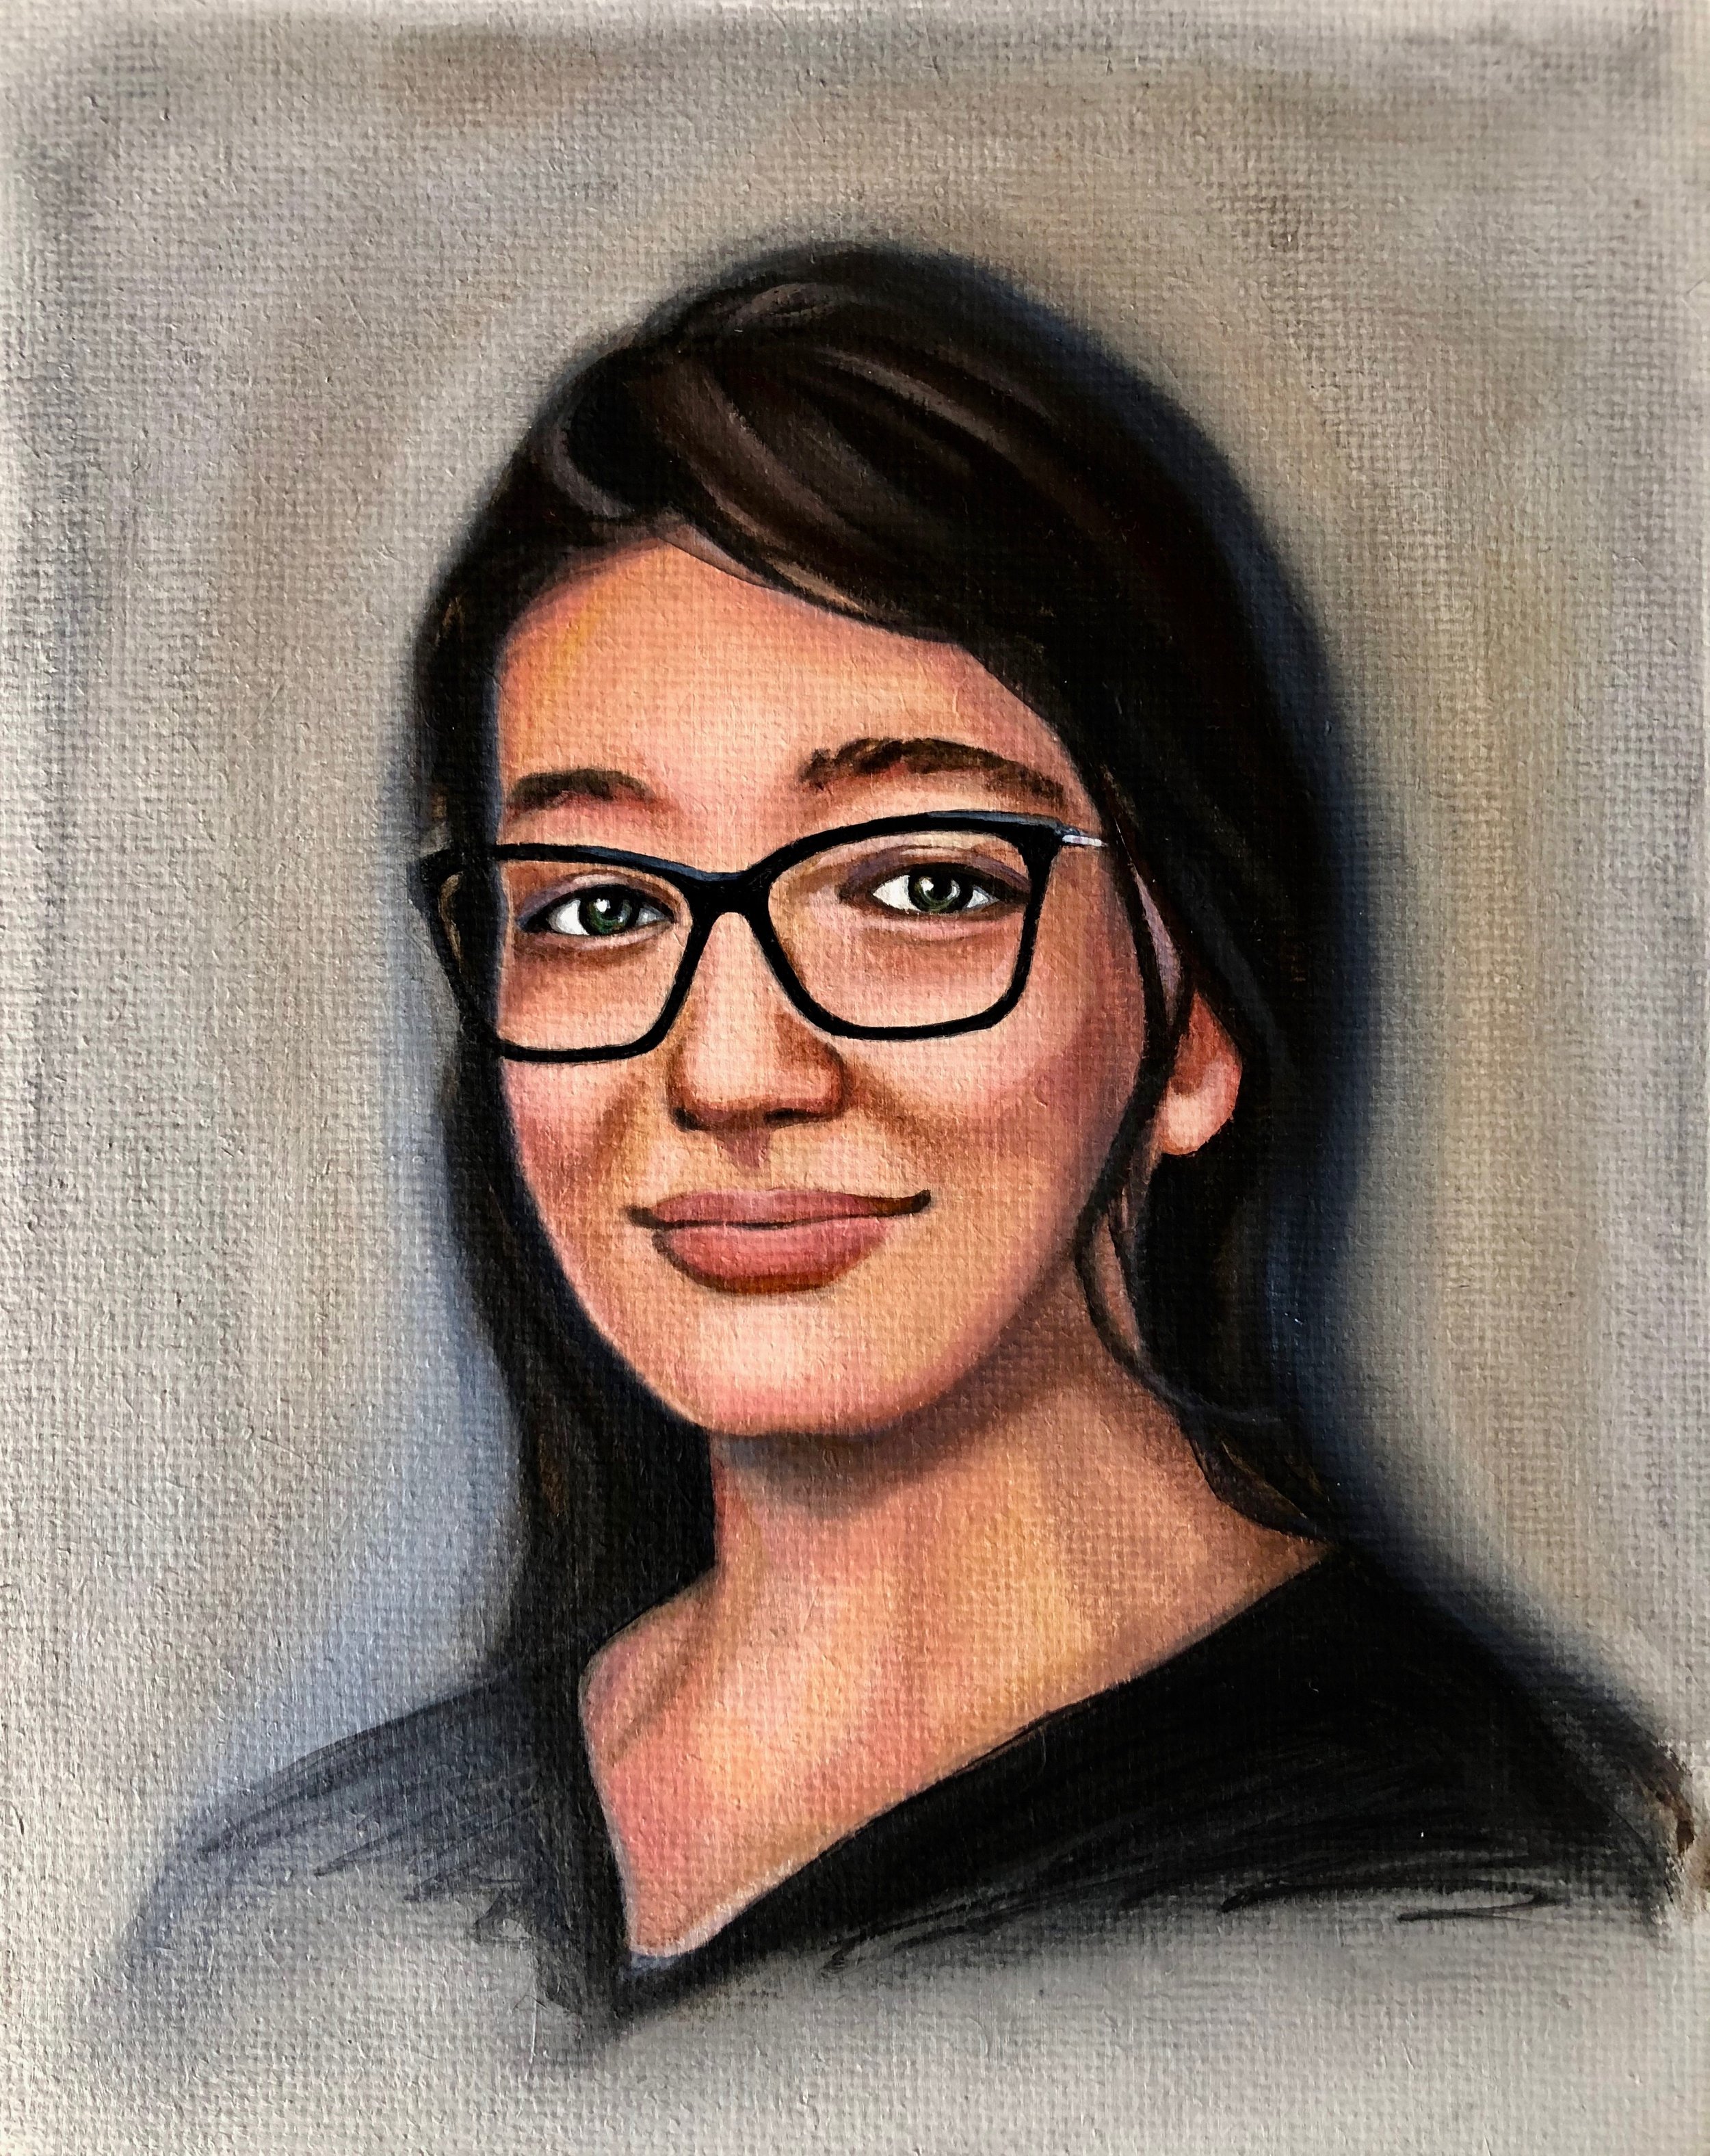 Sarina Esmailzadeh, 16 by Kate Felton Hall